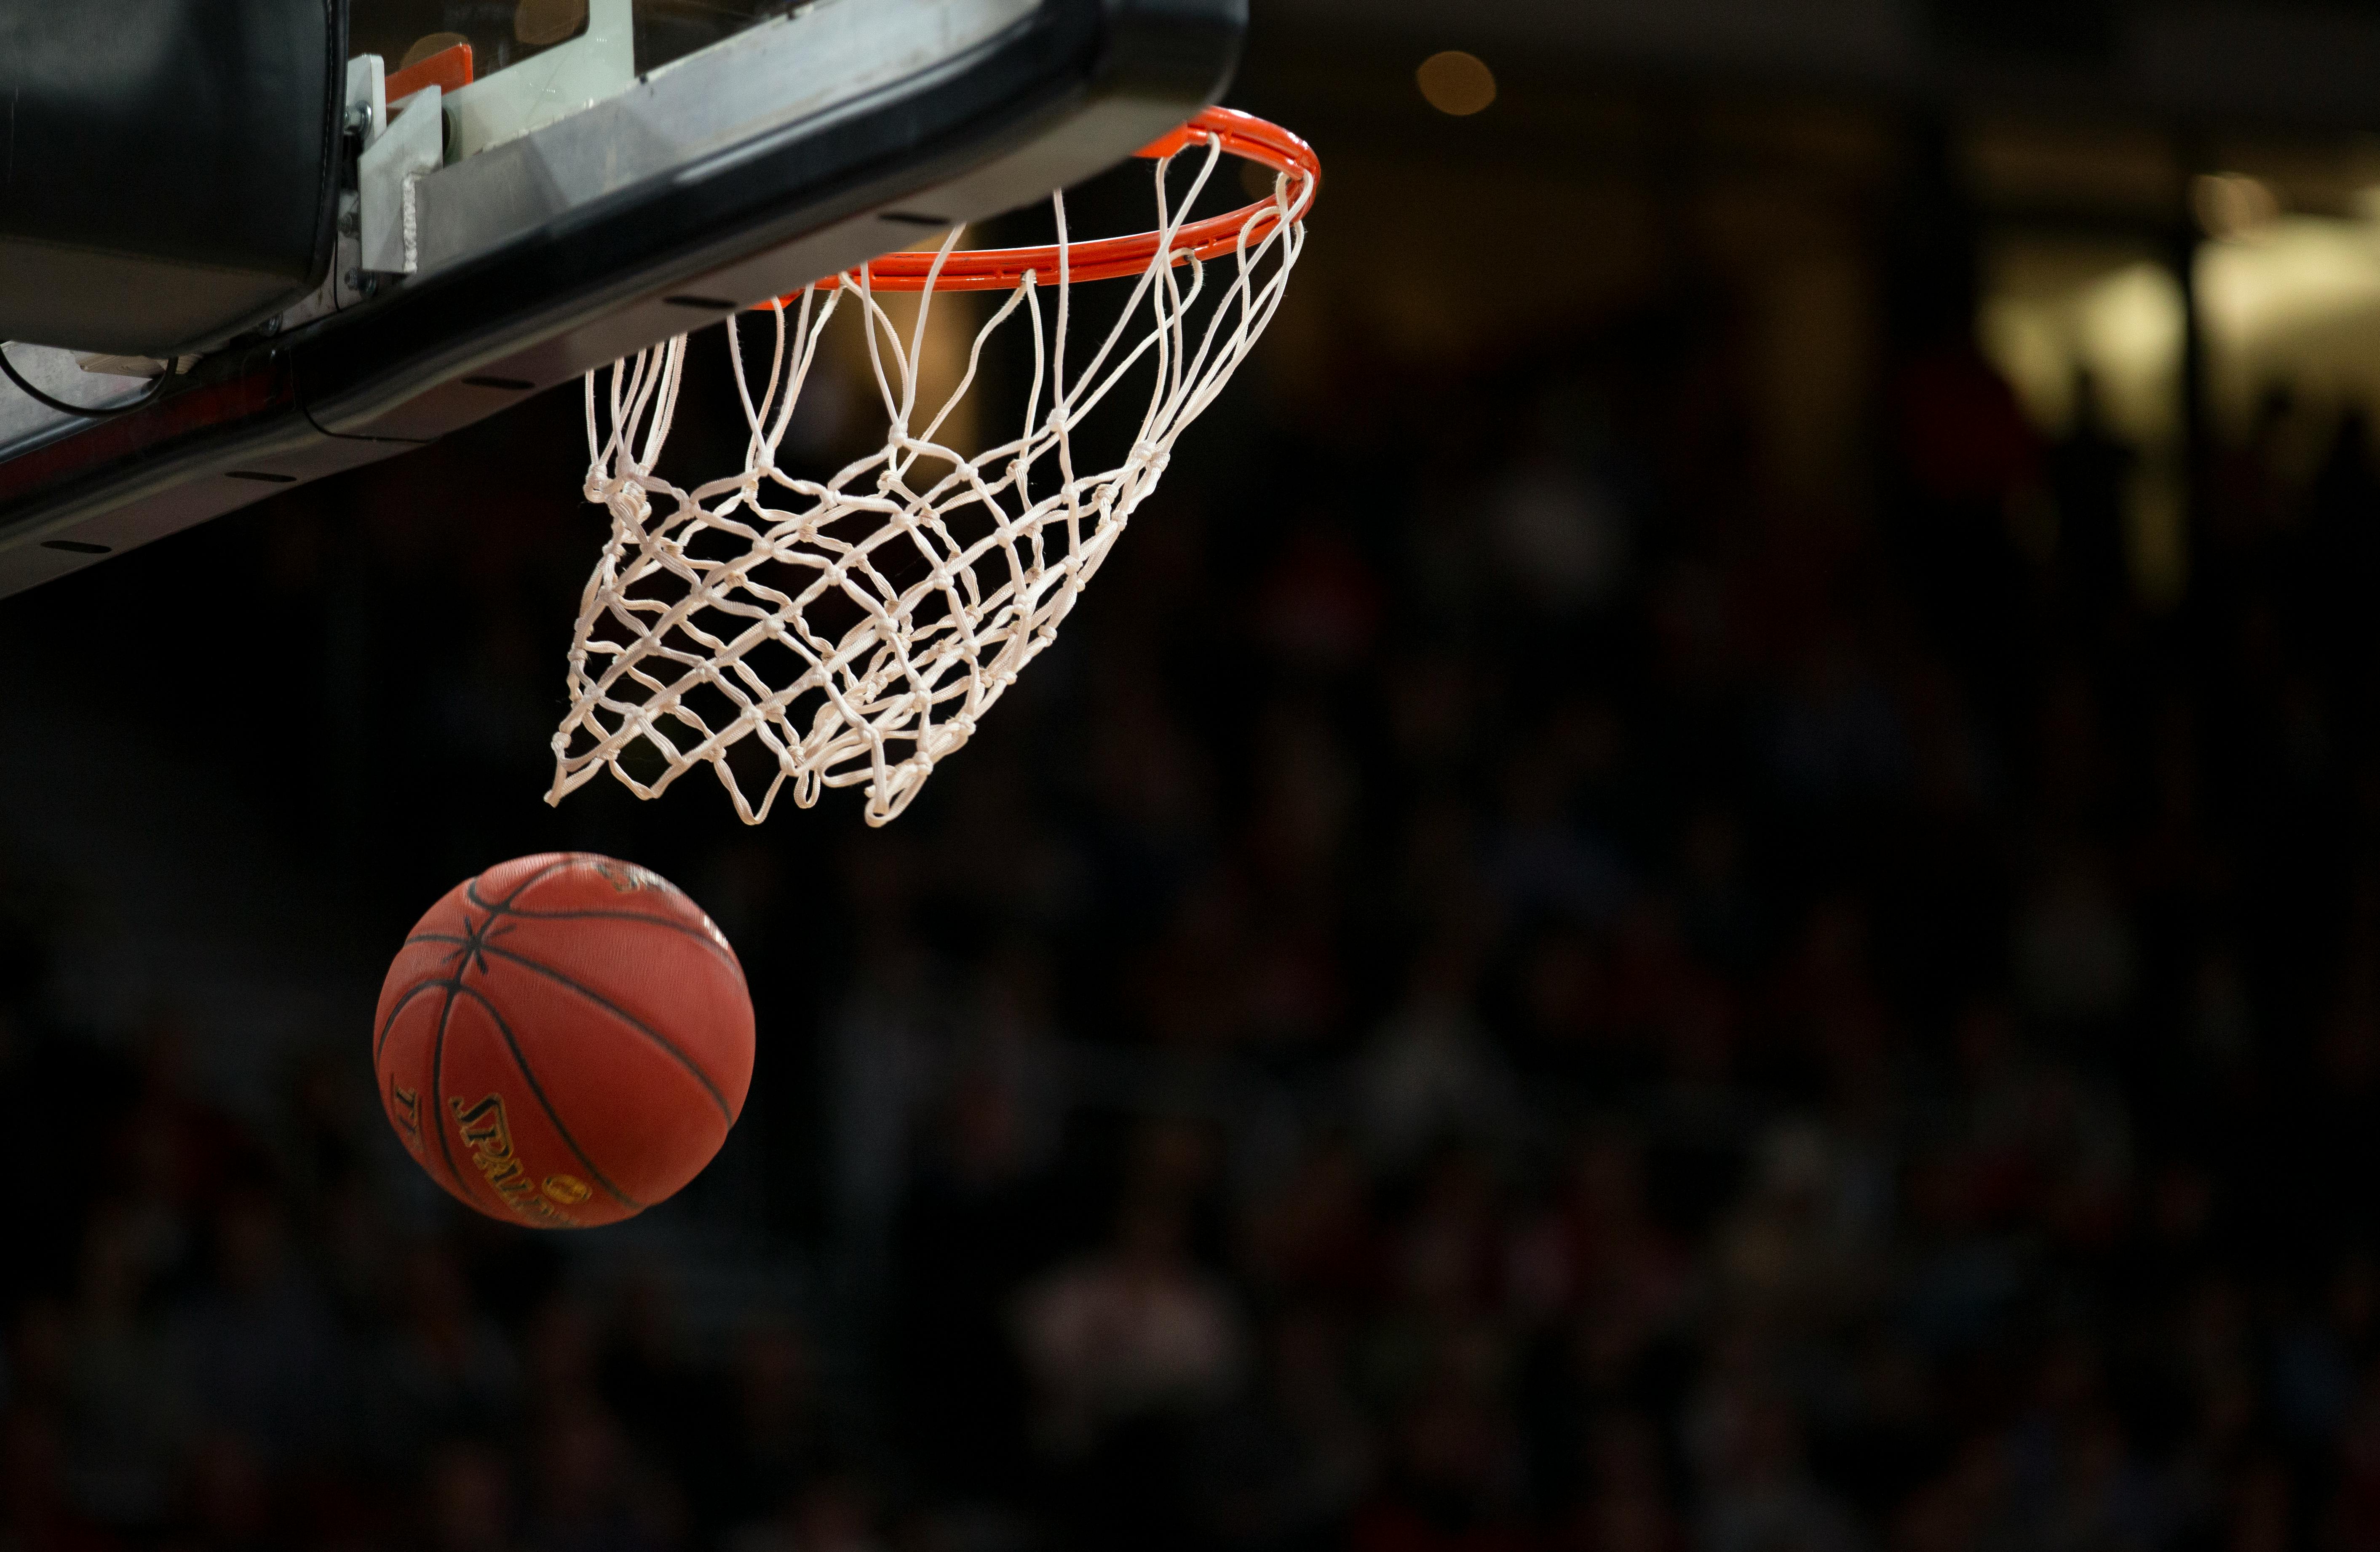 A basketball flying through a basketball hoop.